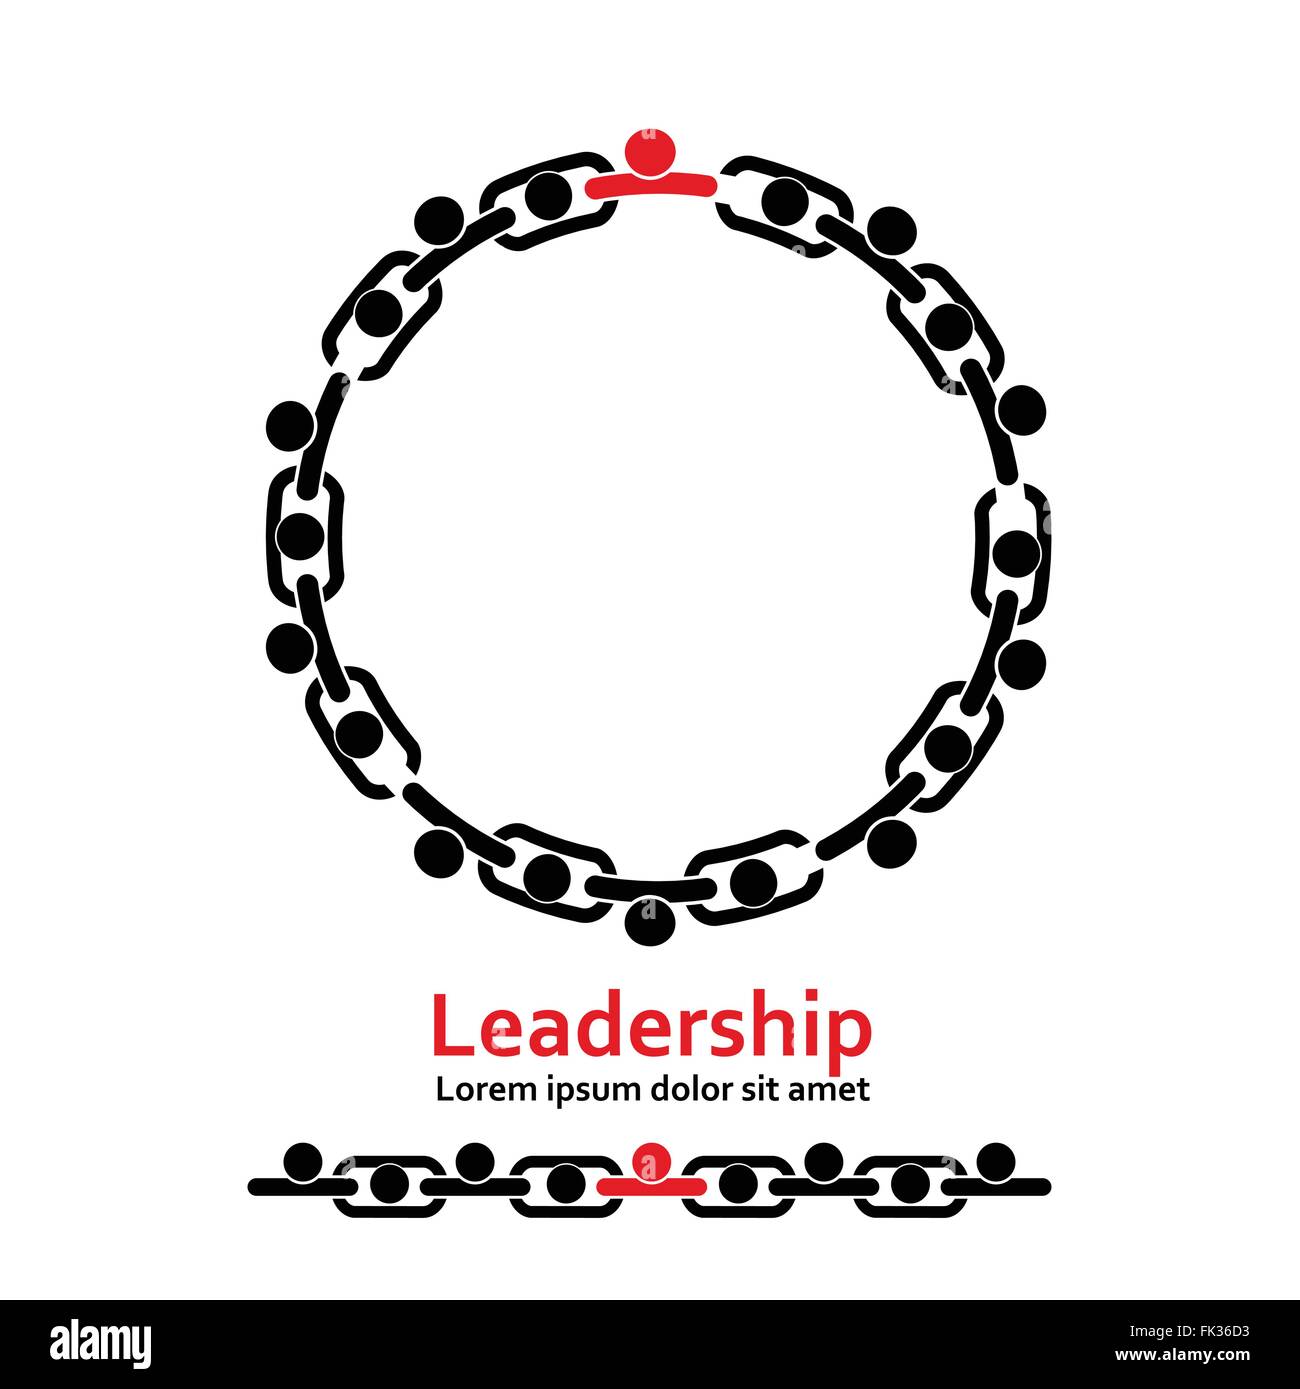 People in chain. Leadership, vector Stock Vector